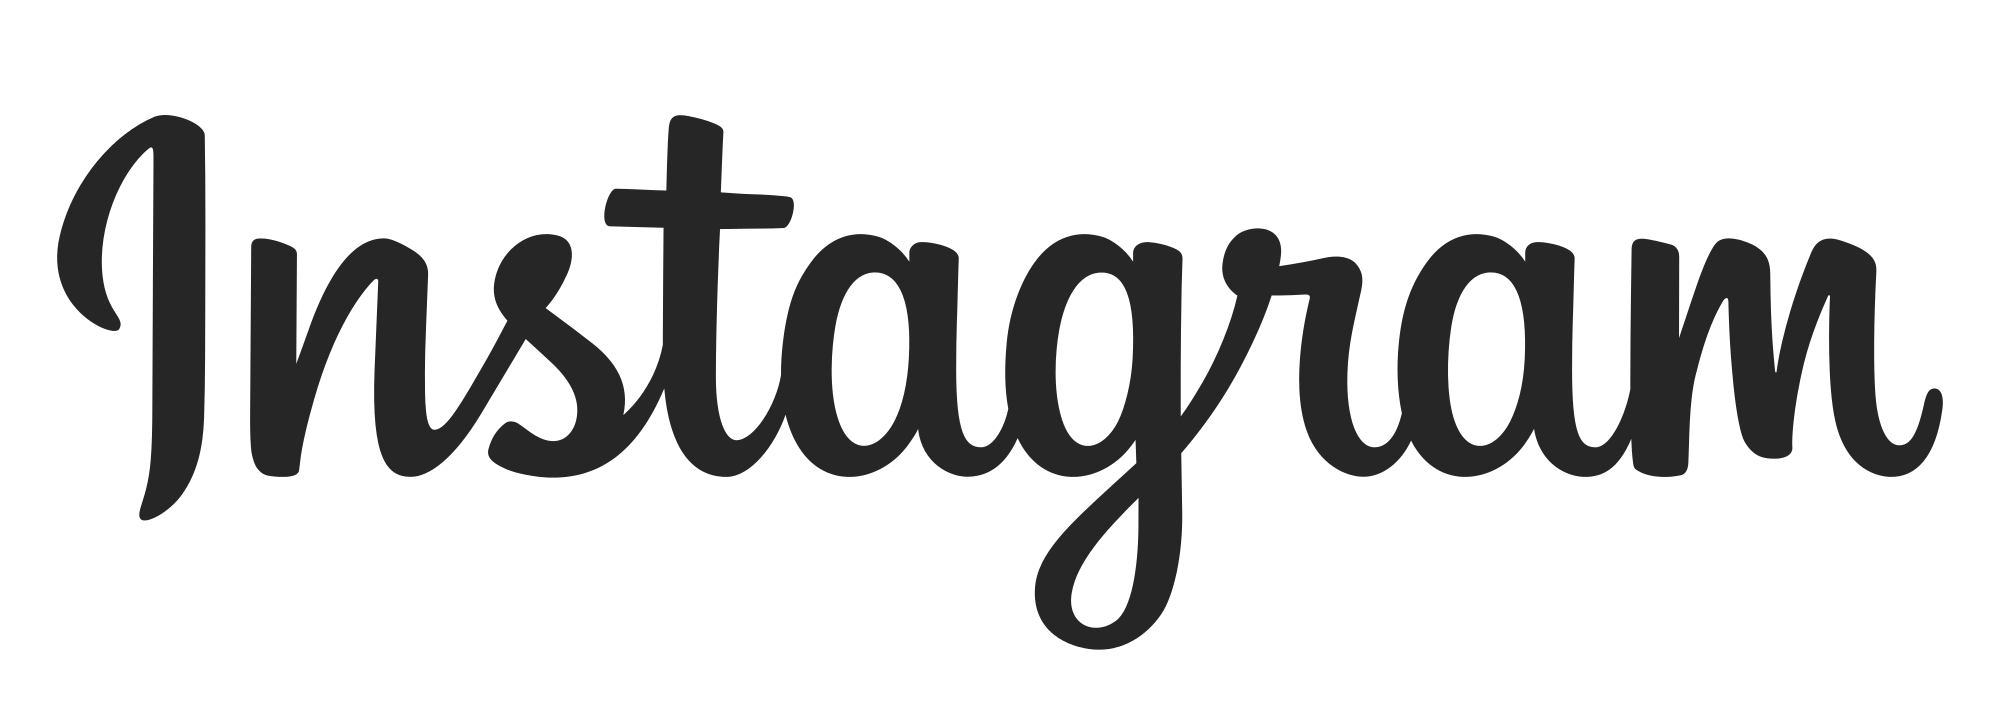 Follow Us On Instagram Logo - instagram